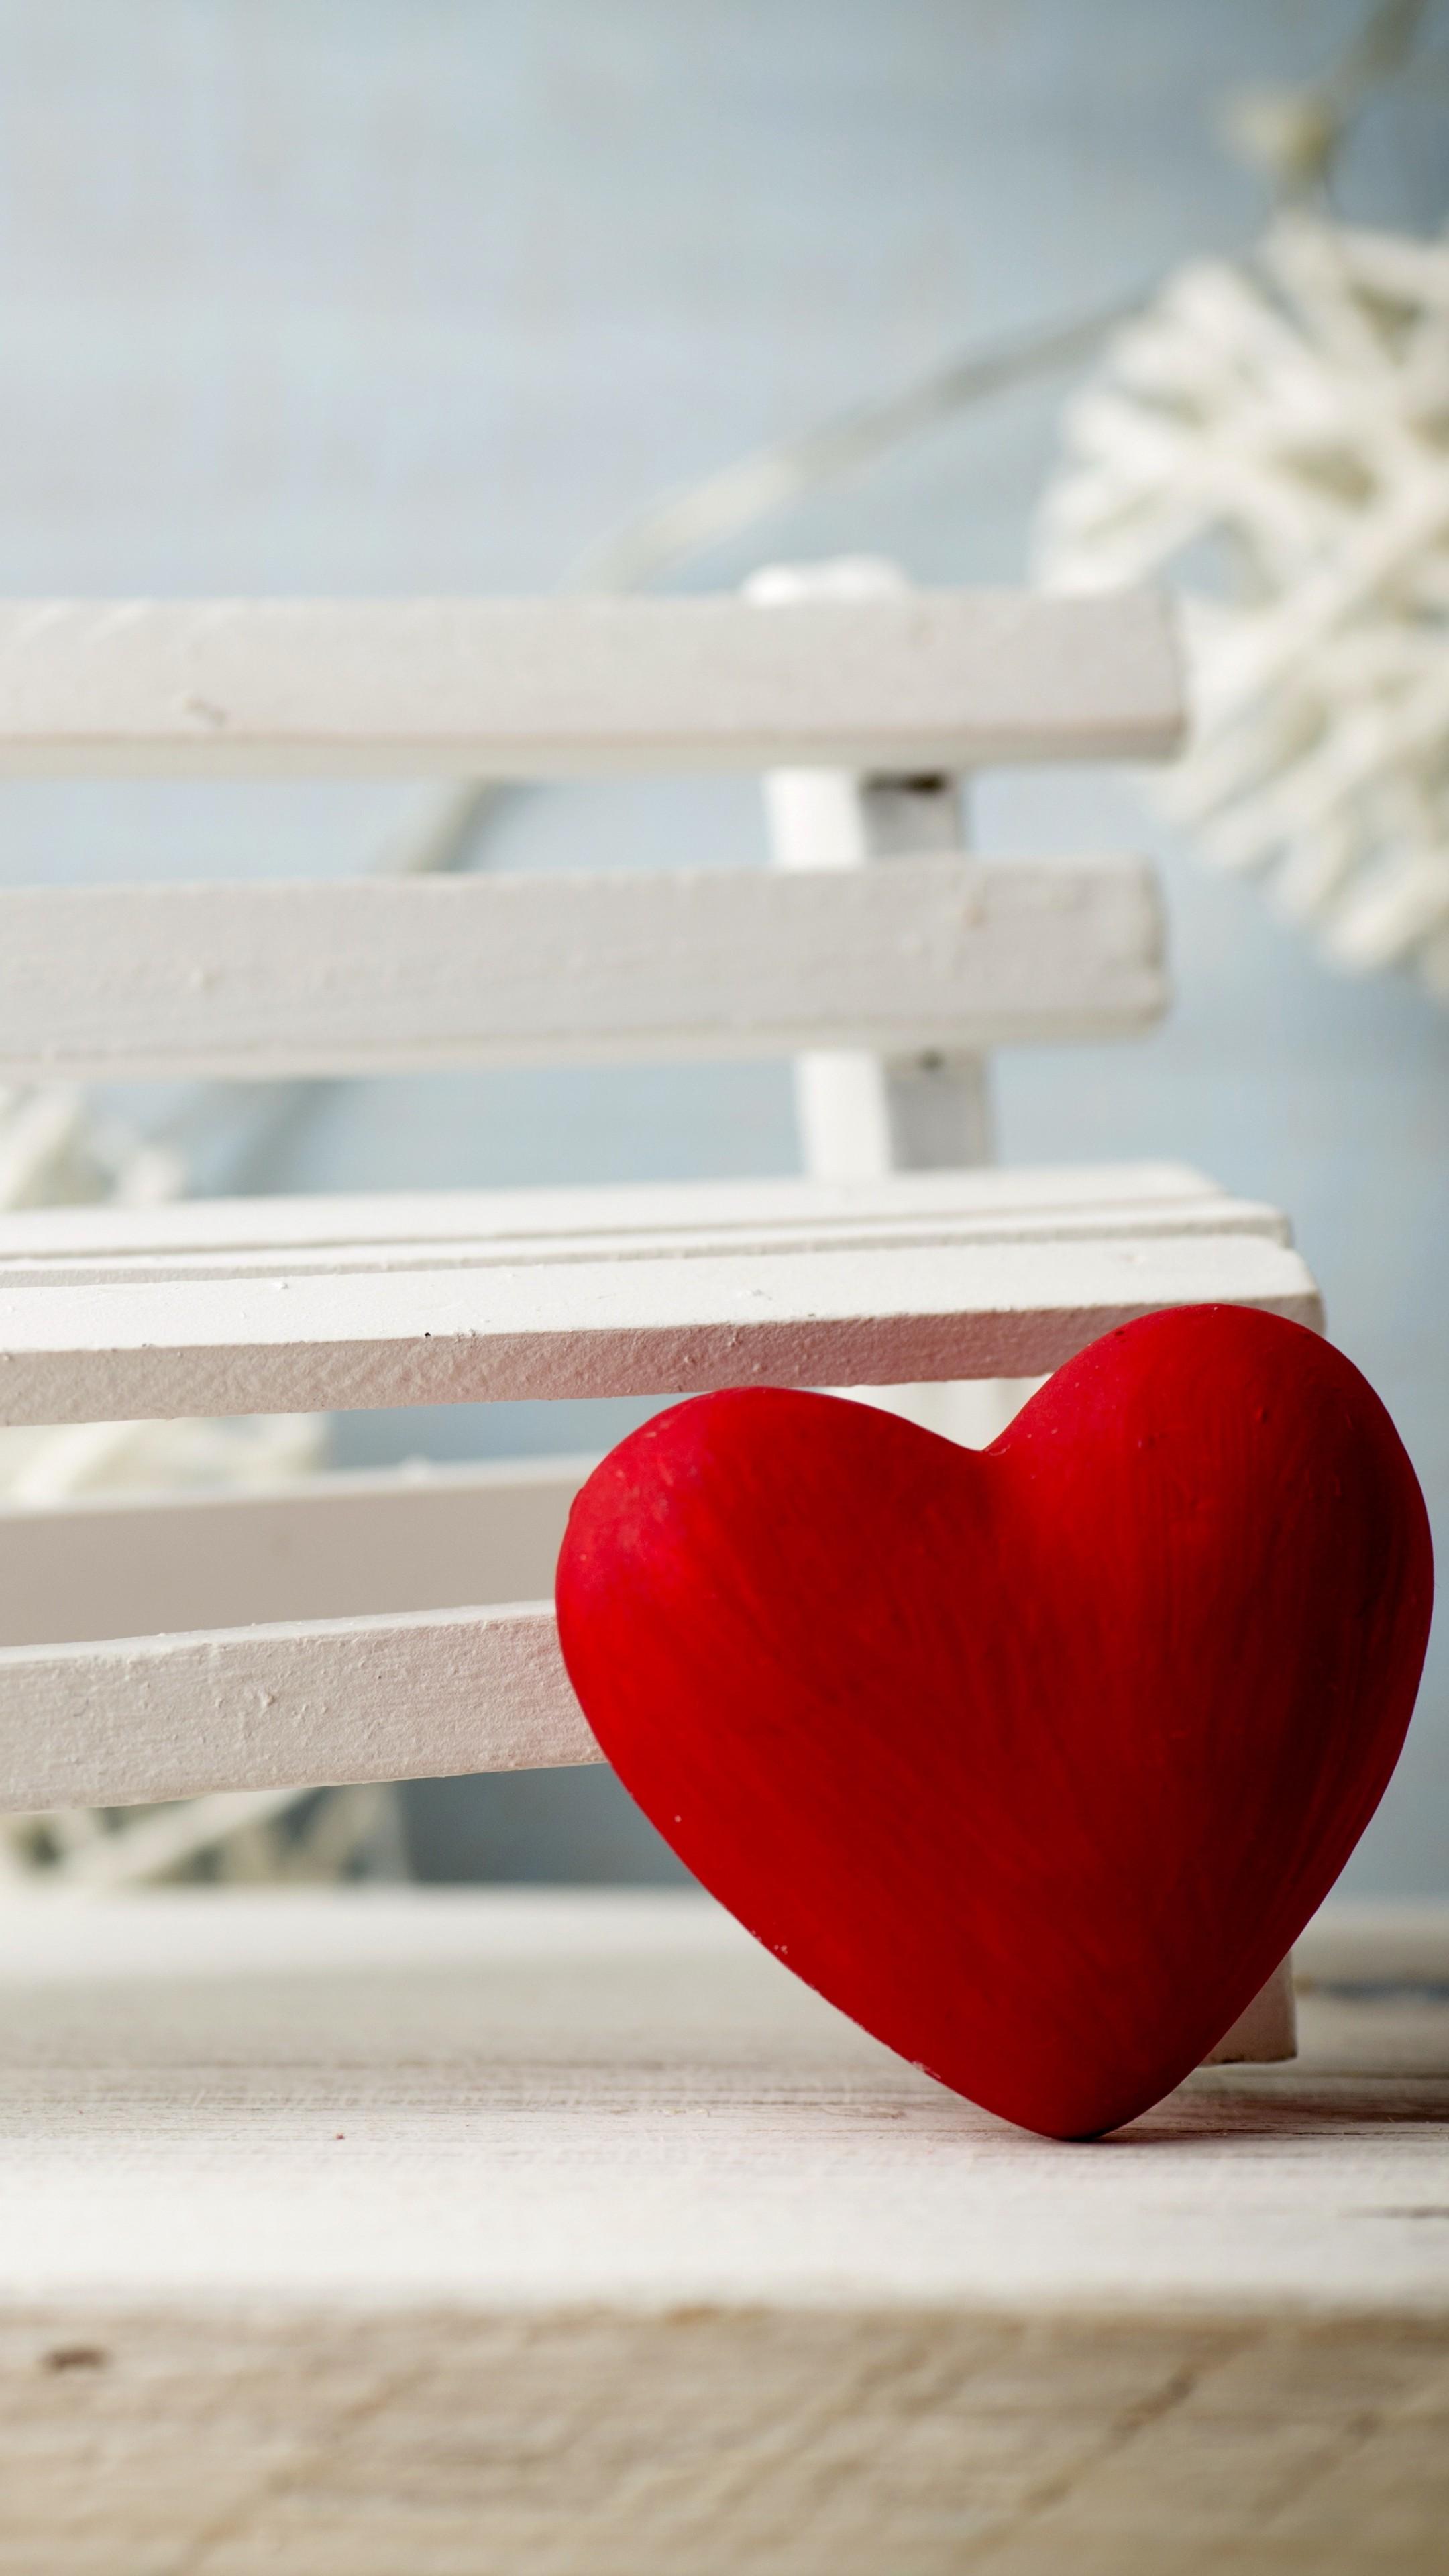 Romantic Love Wallpaper Heart Image